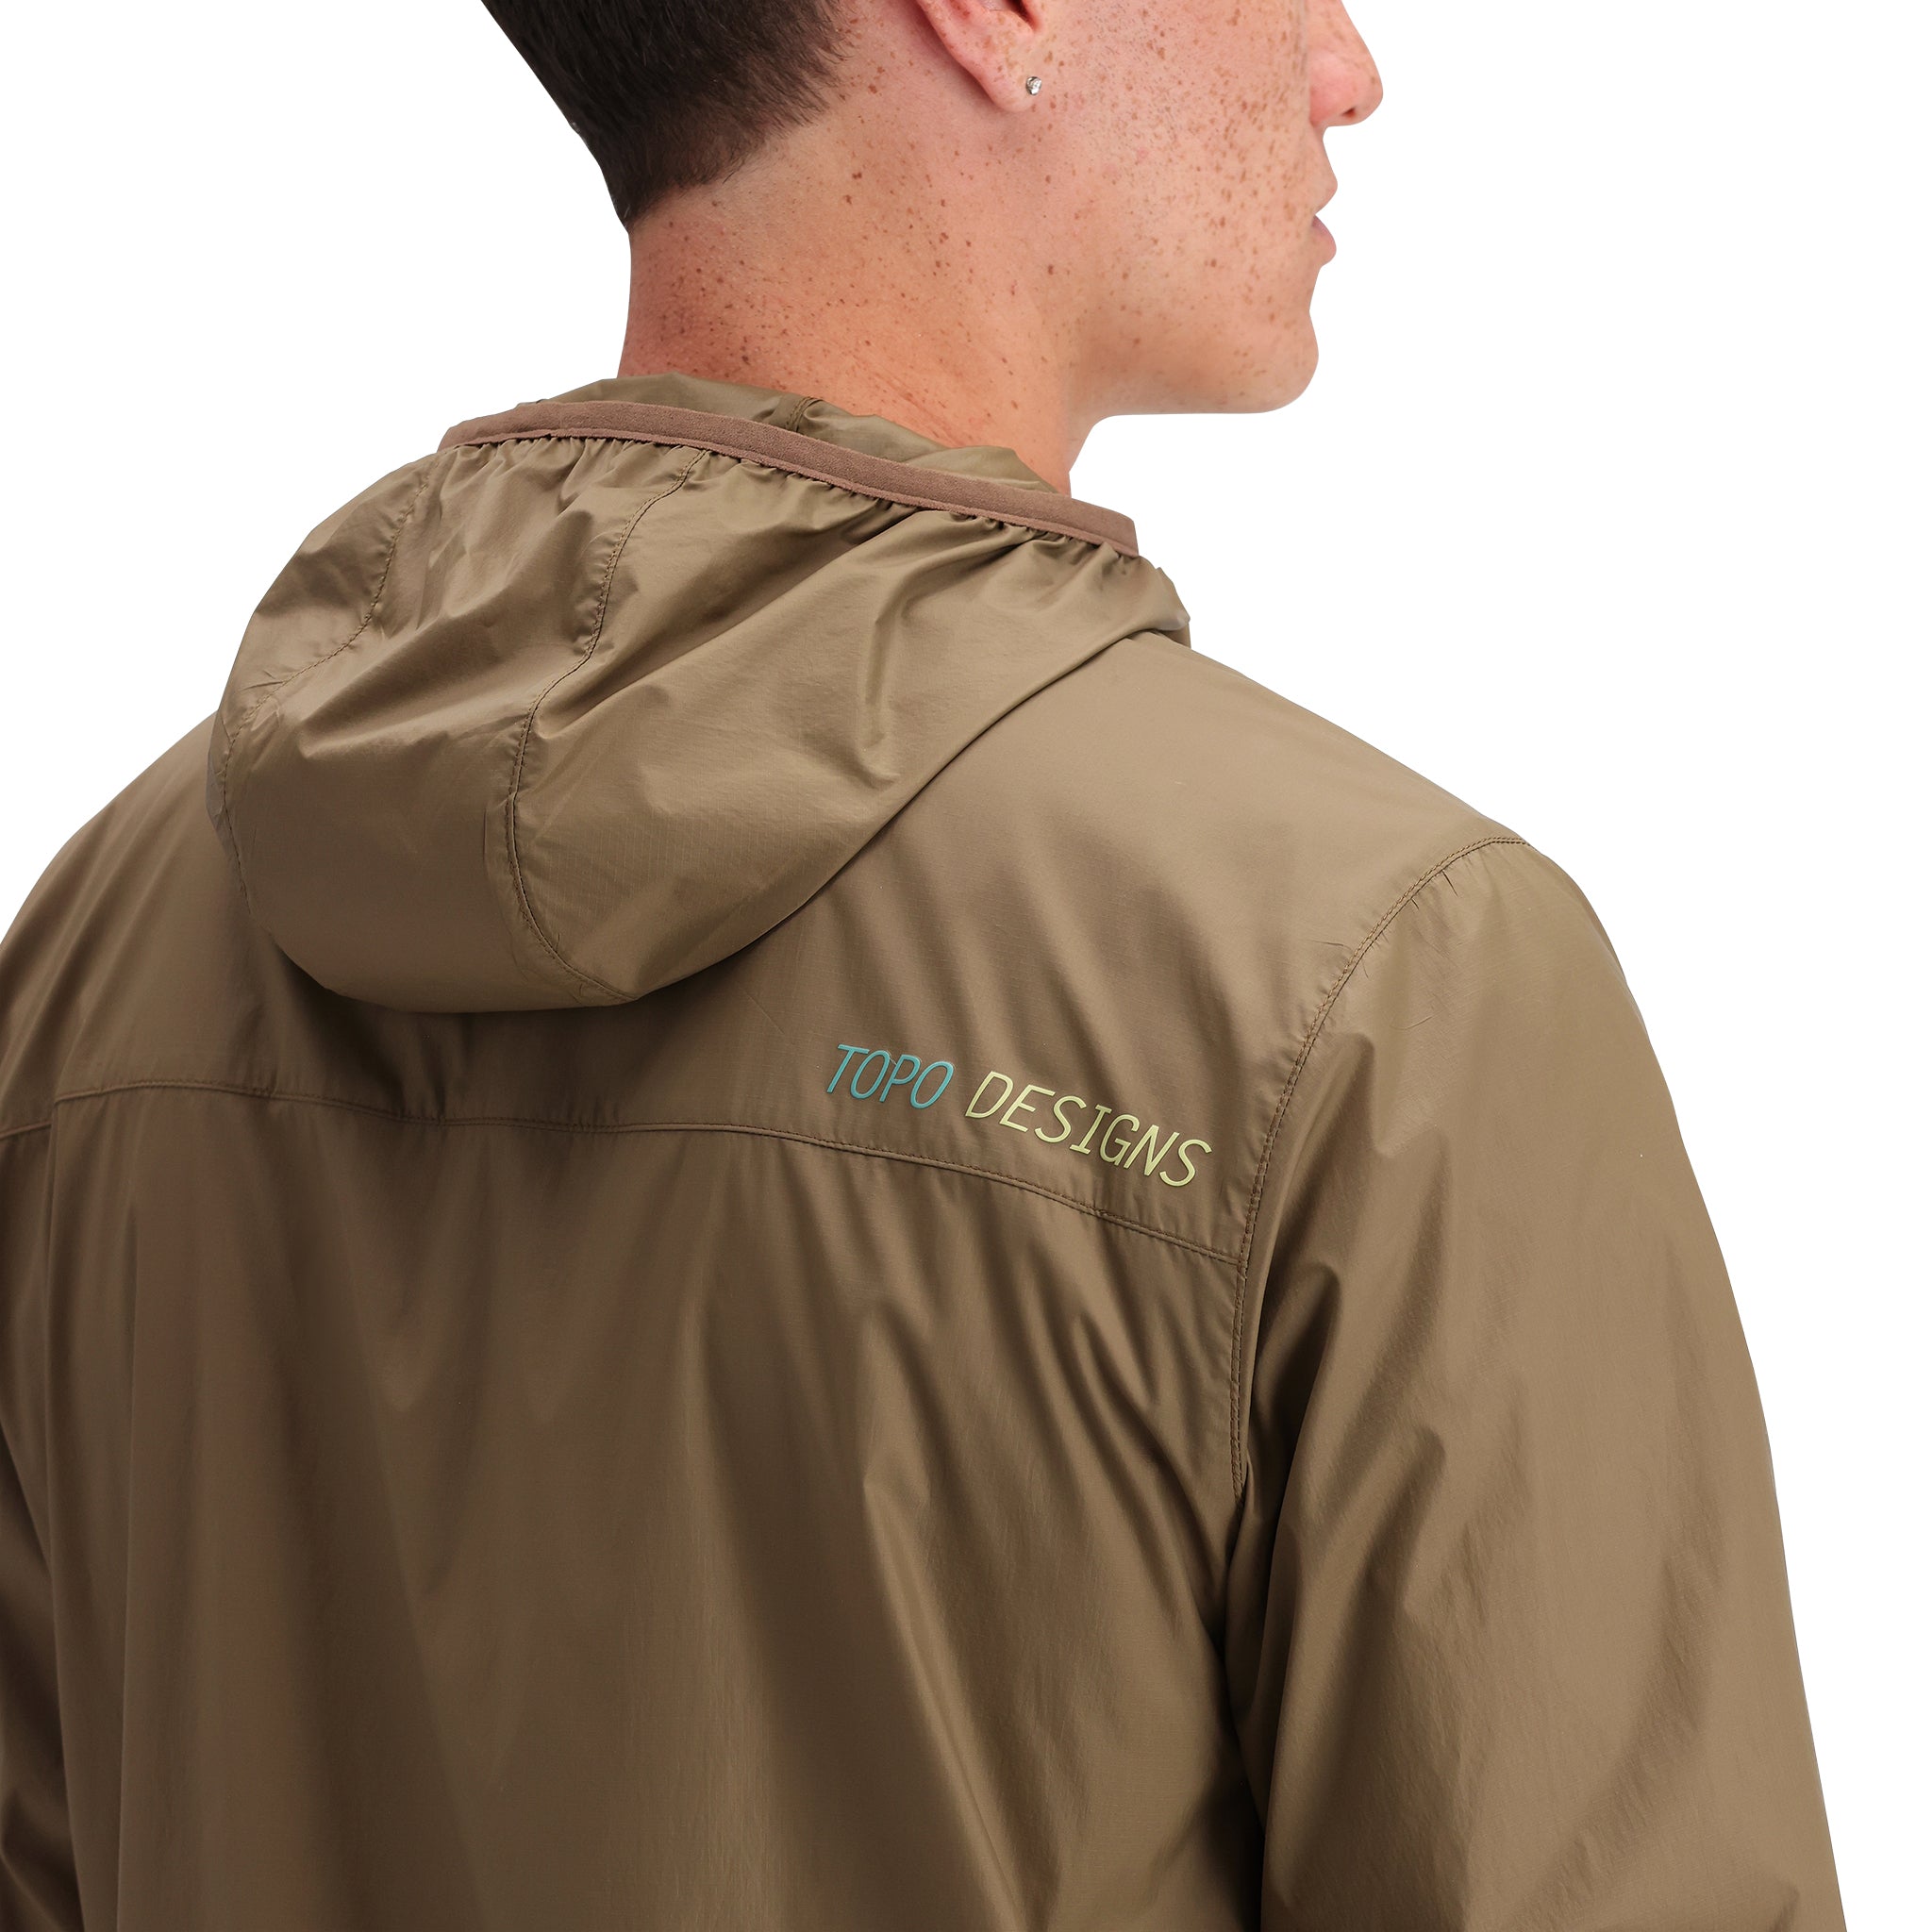 Detail shot of Topo Designs Global Ultralight Packable Jacket - Men's in "Desert Palm"